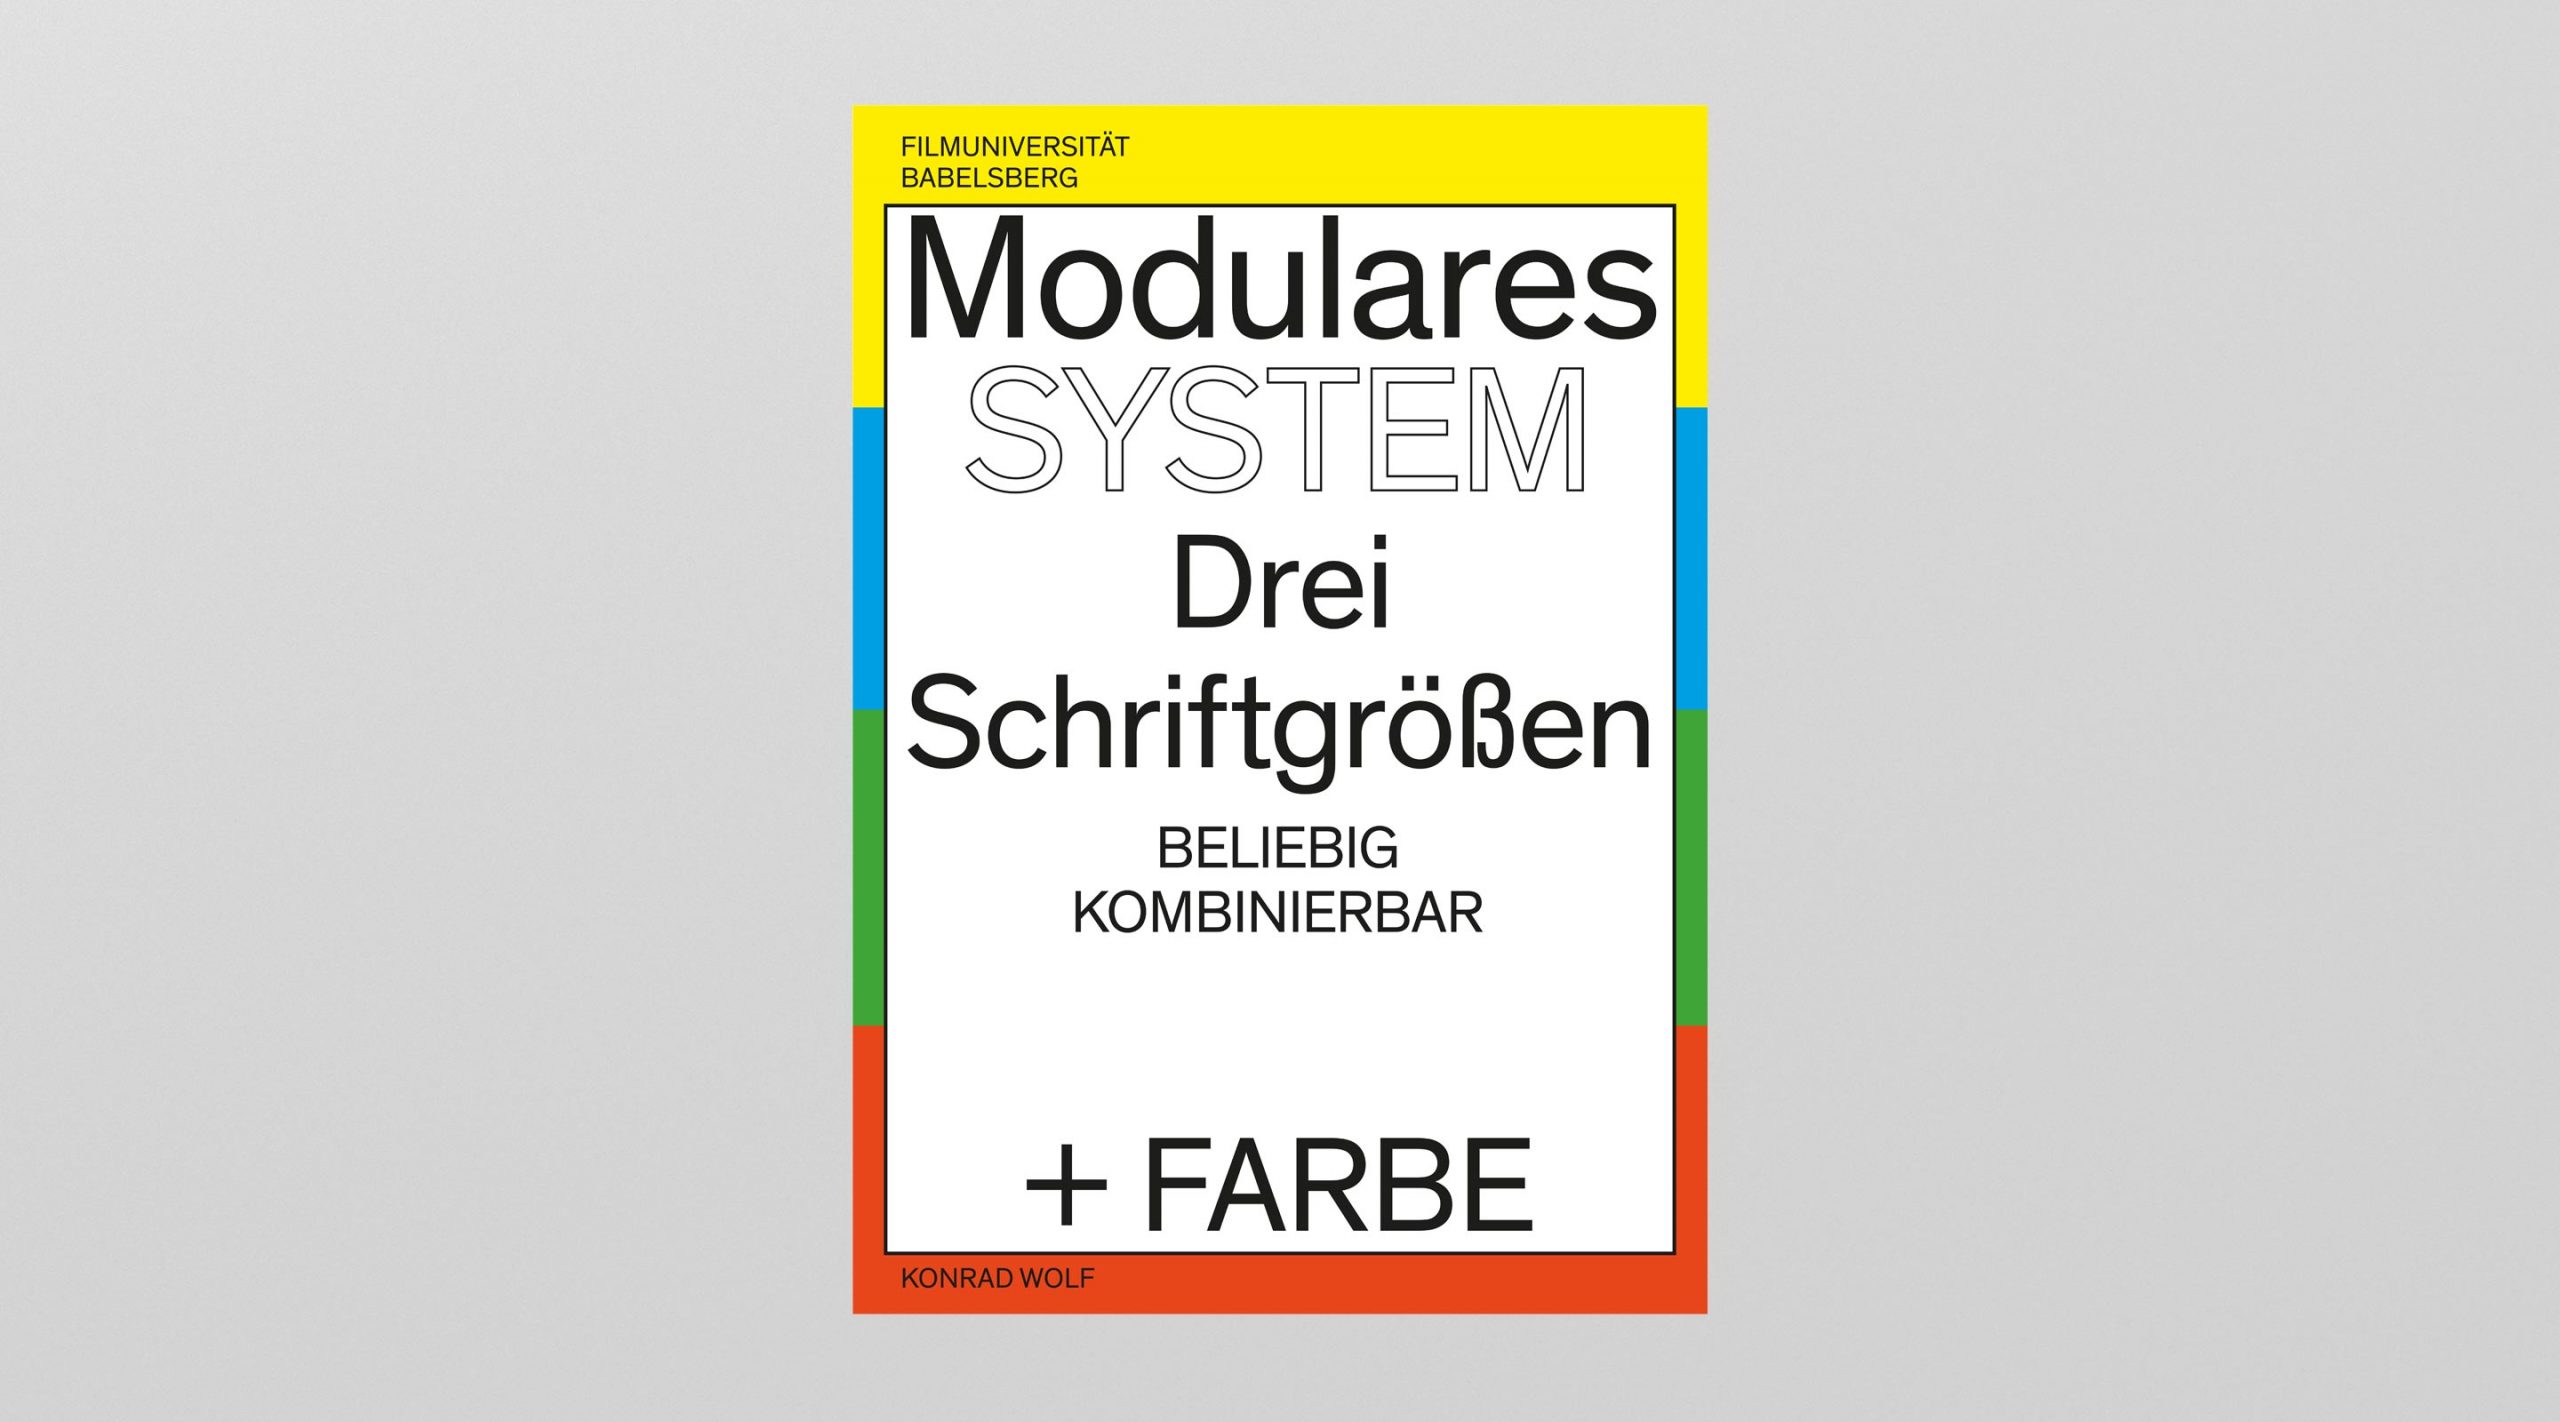 Filmuniversität Branding Proposal Plakatkonzept das modulare System – Uthmöller und Partner